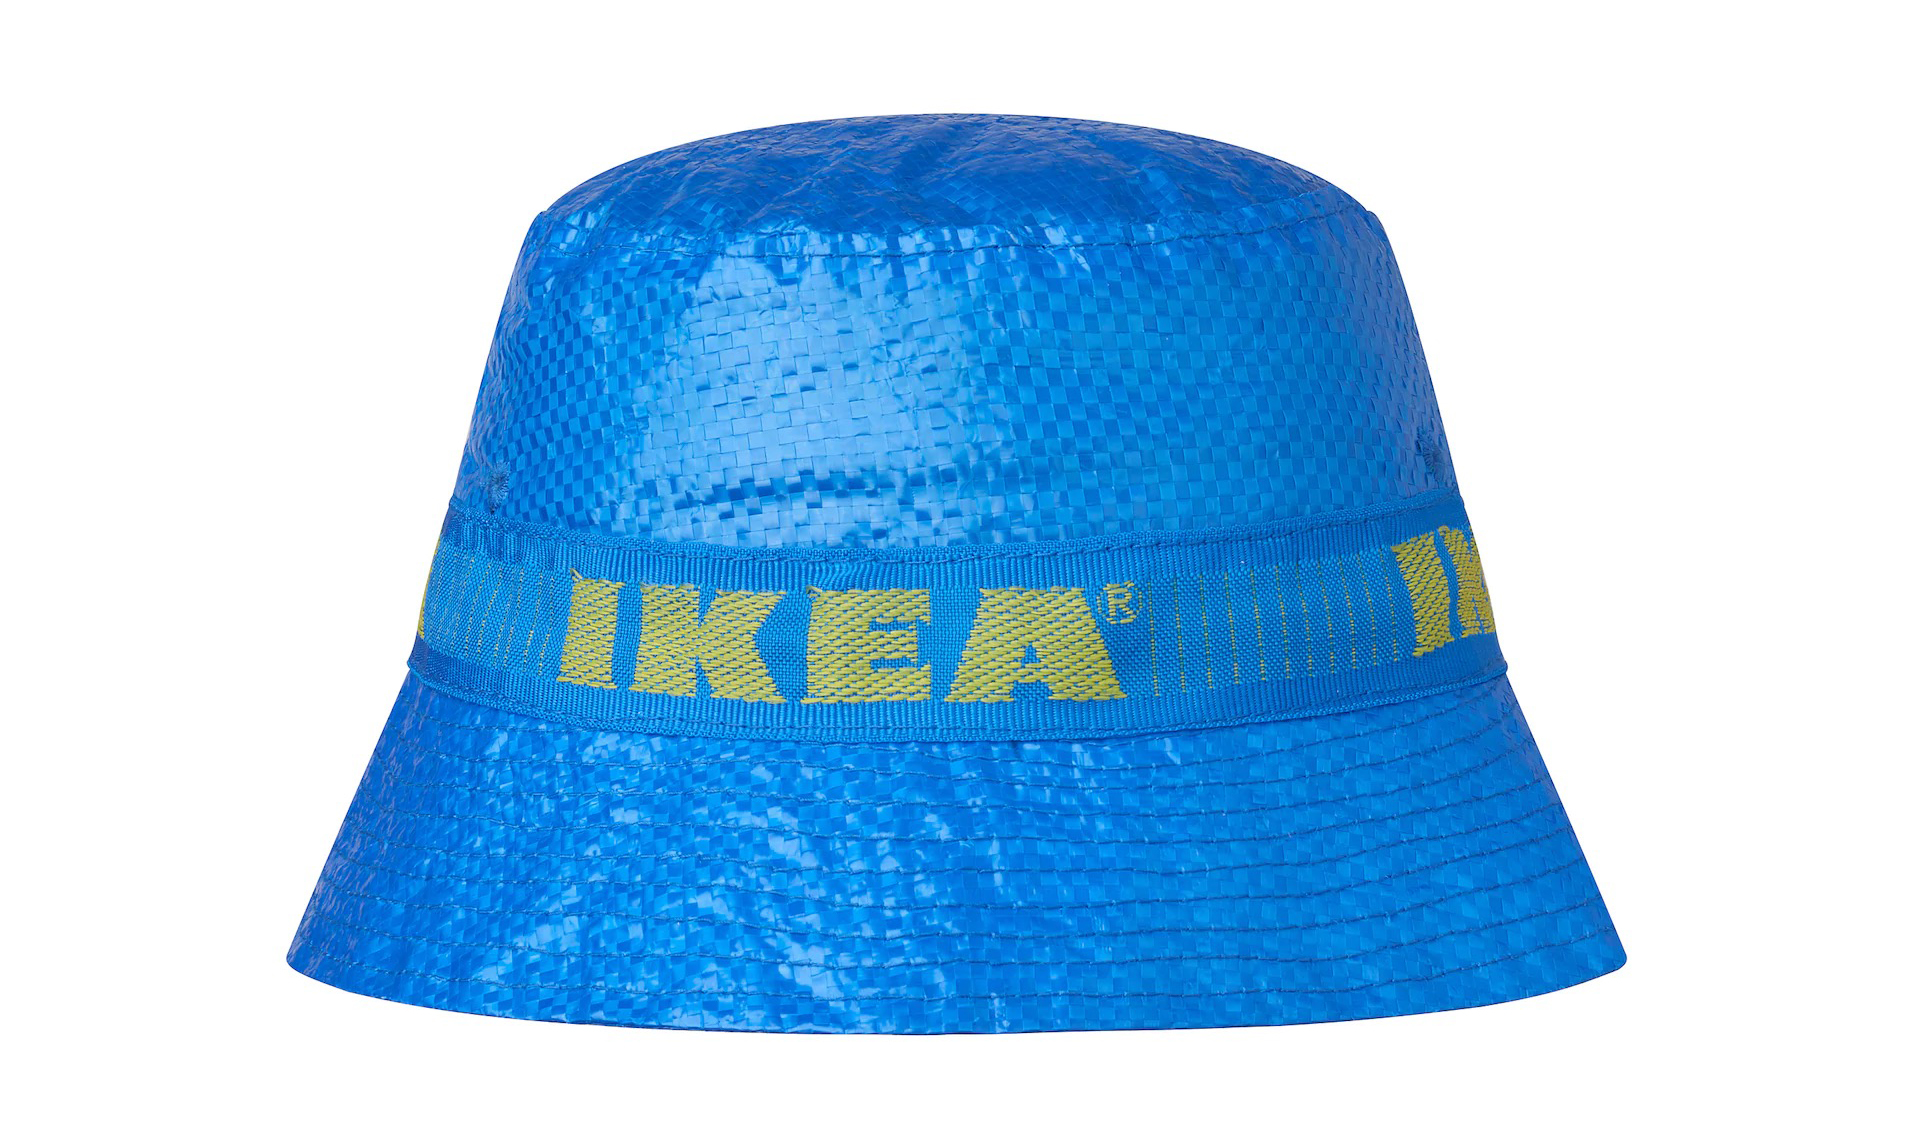 IKEA KNORVA 渔夫帽再度补货发售